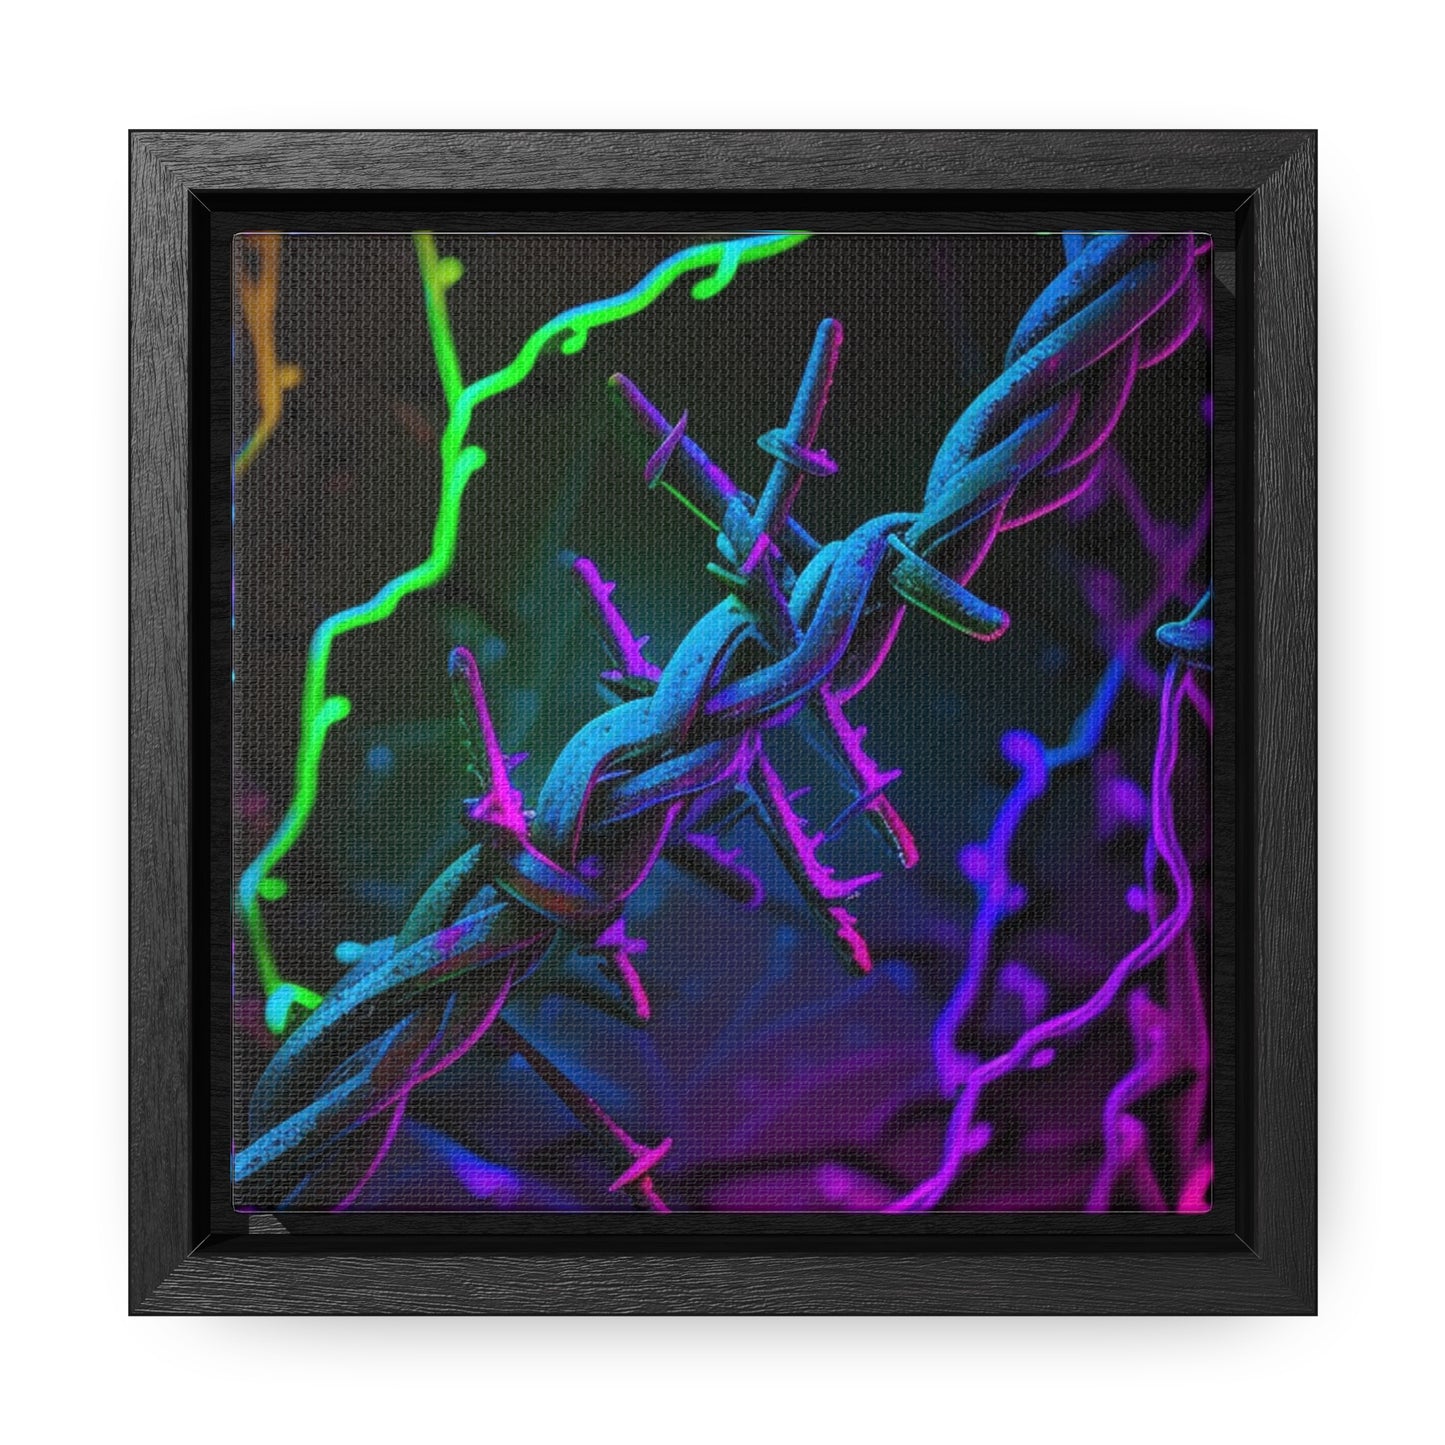 Gallery Canvas Wraps, Square Frame Macro Neon Barbs 4